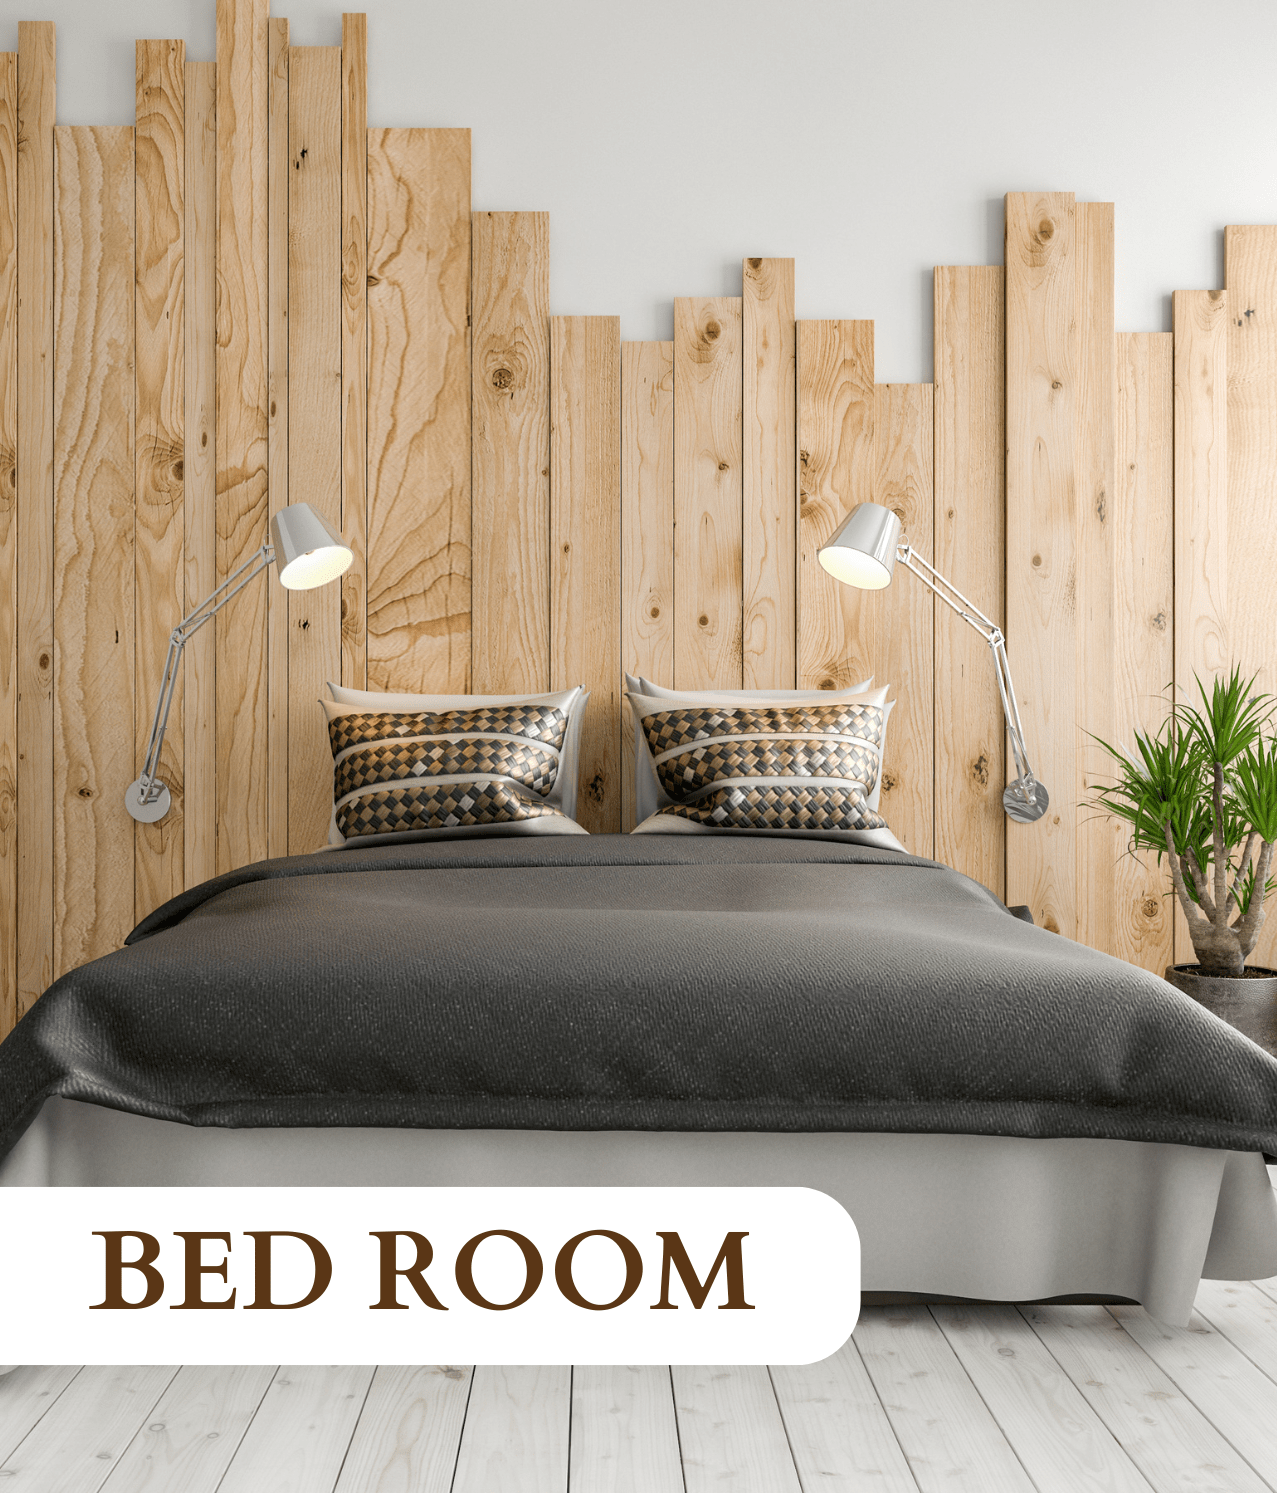 Urbanteakfunandinterior - Home Page - Bed Room